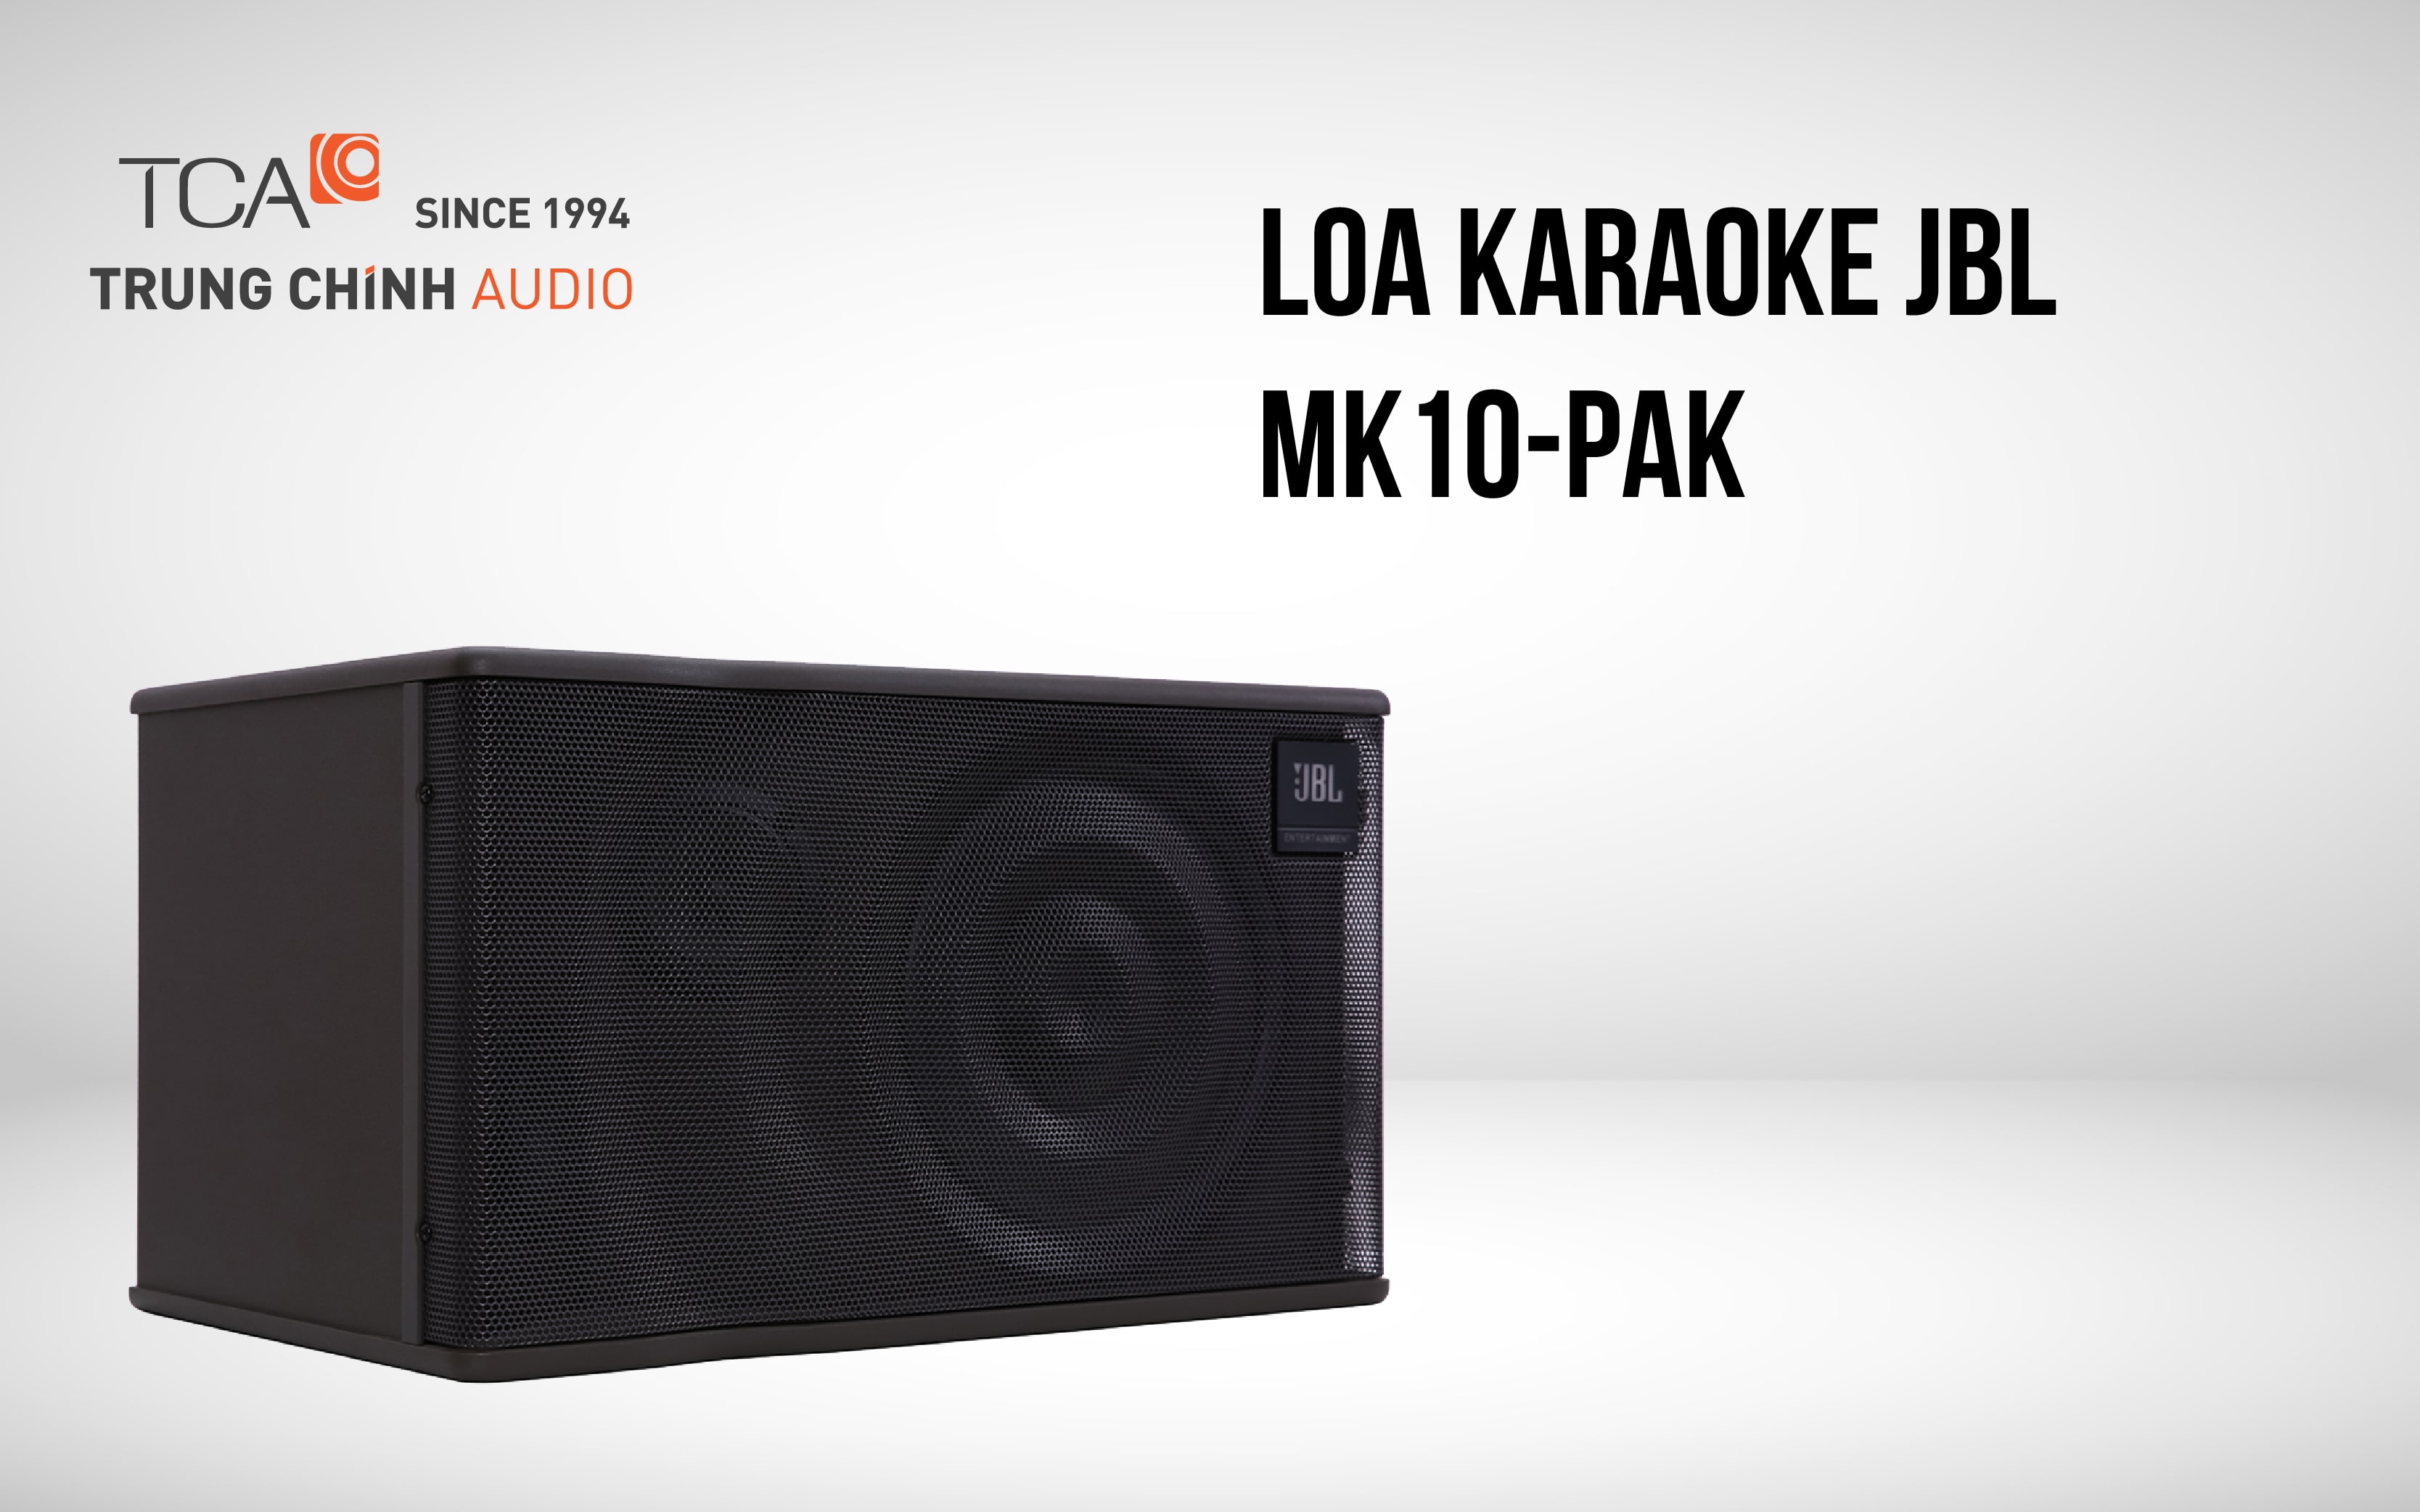 Loa karaoke JBL MK10-PAK